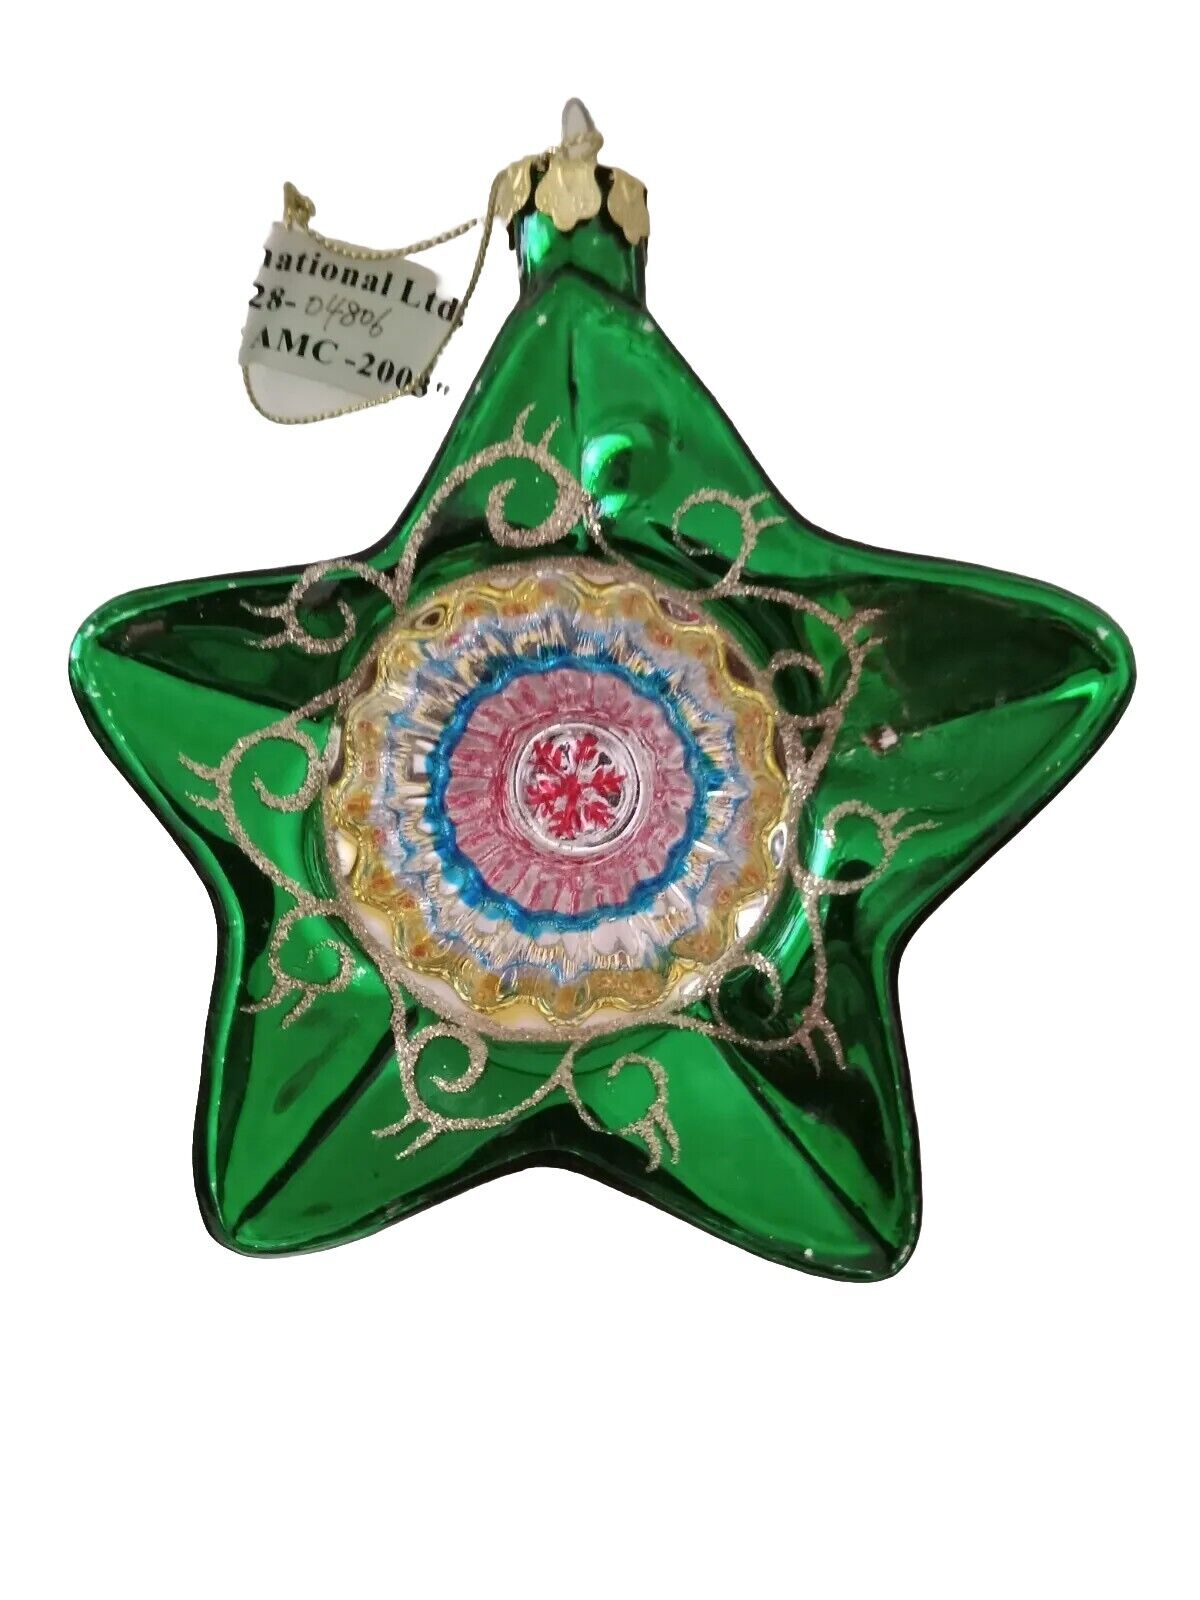 Rare KREBS For AMC Sample Green Star Indent Reflector Christmas Ornament - 2003